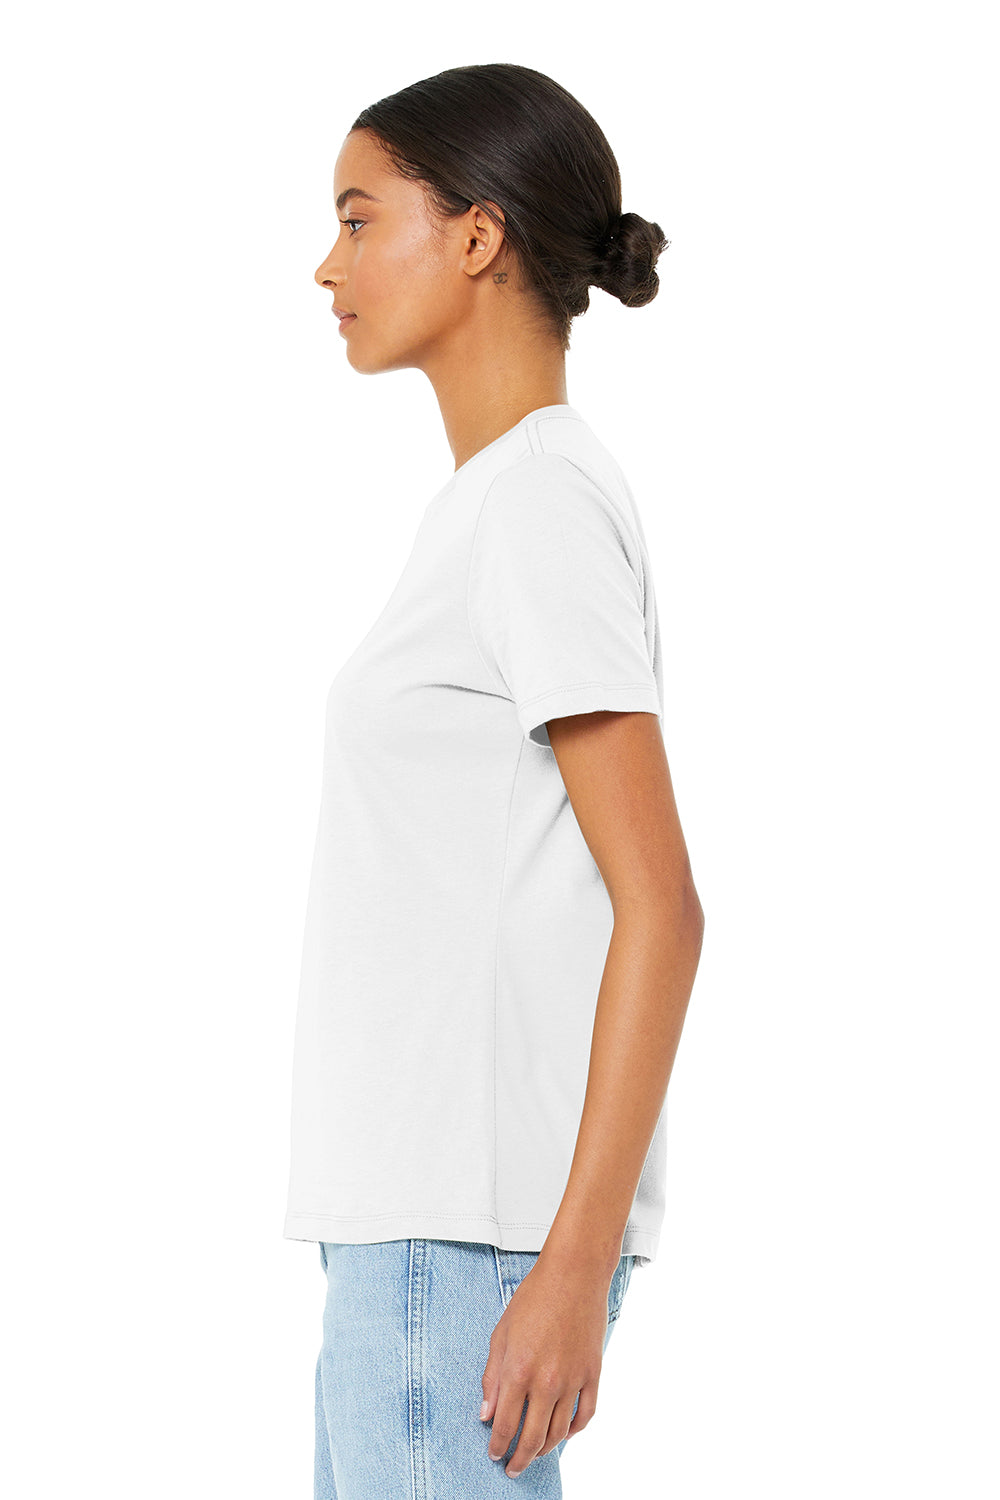 Bella + Canvas BC6400CVC/6400CVC Womens CVC Short Sleeve Crewneck T-Shirt Solid White Model Side